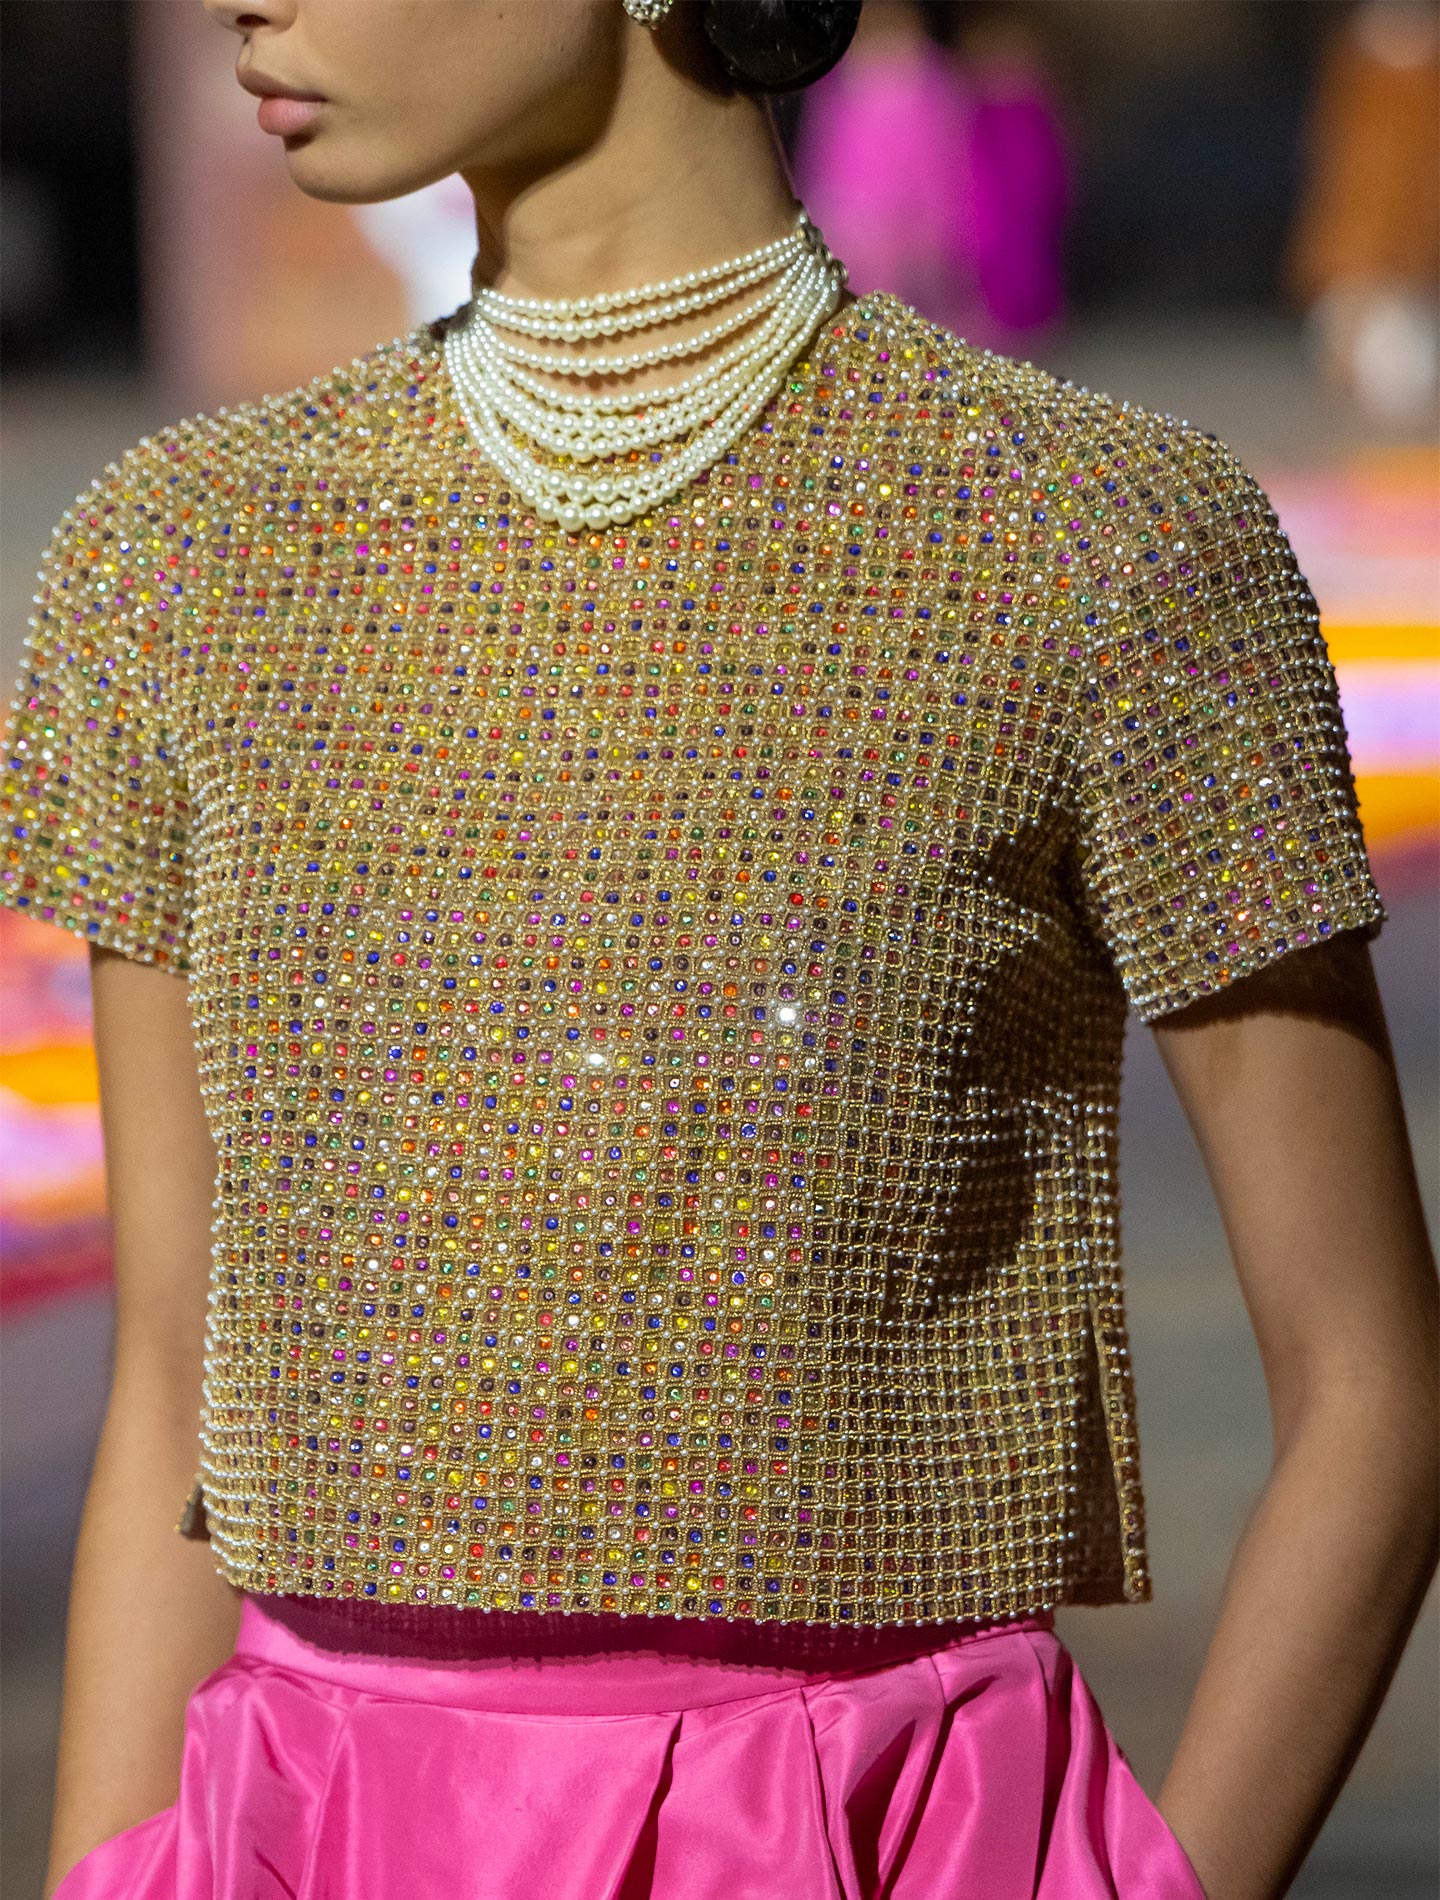 Details from Maria Grazia Chiuri's Dior Fall 23 fashion show at the Gateway of India in Mumbai